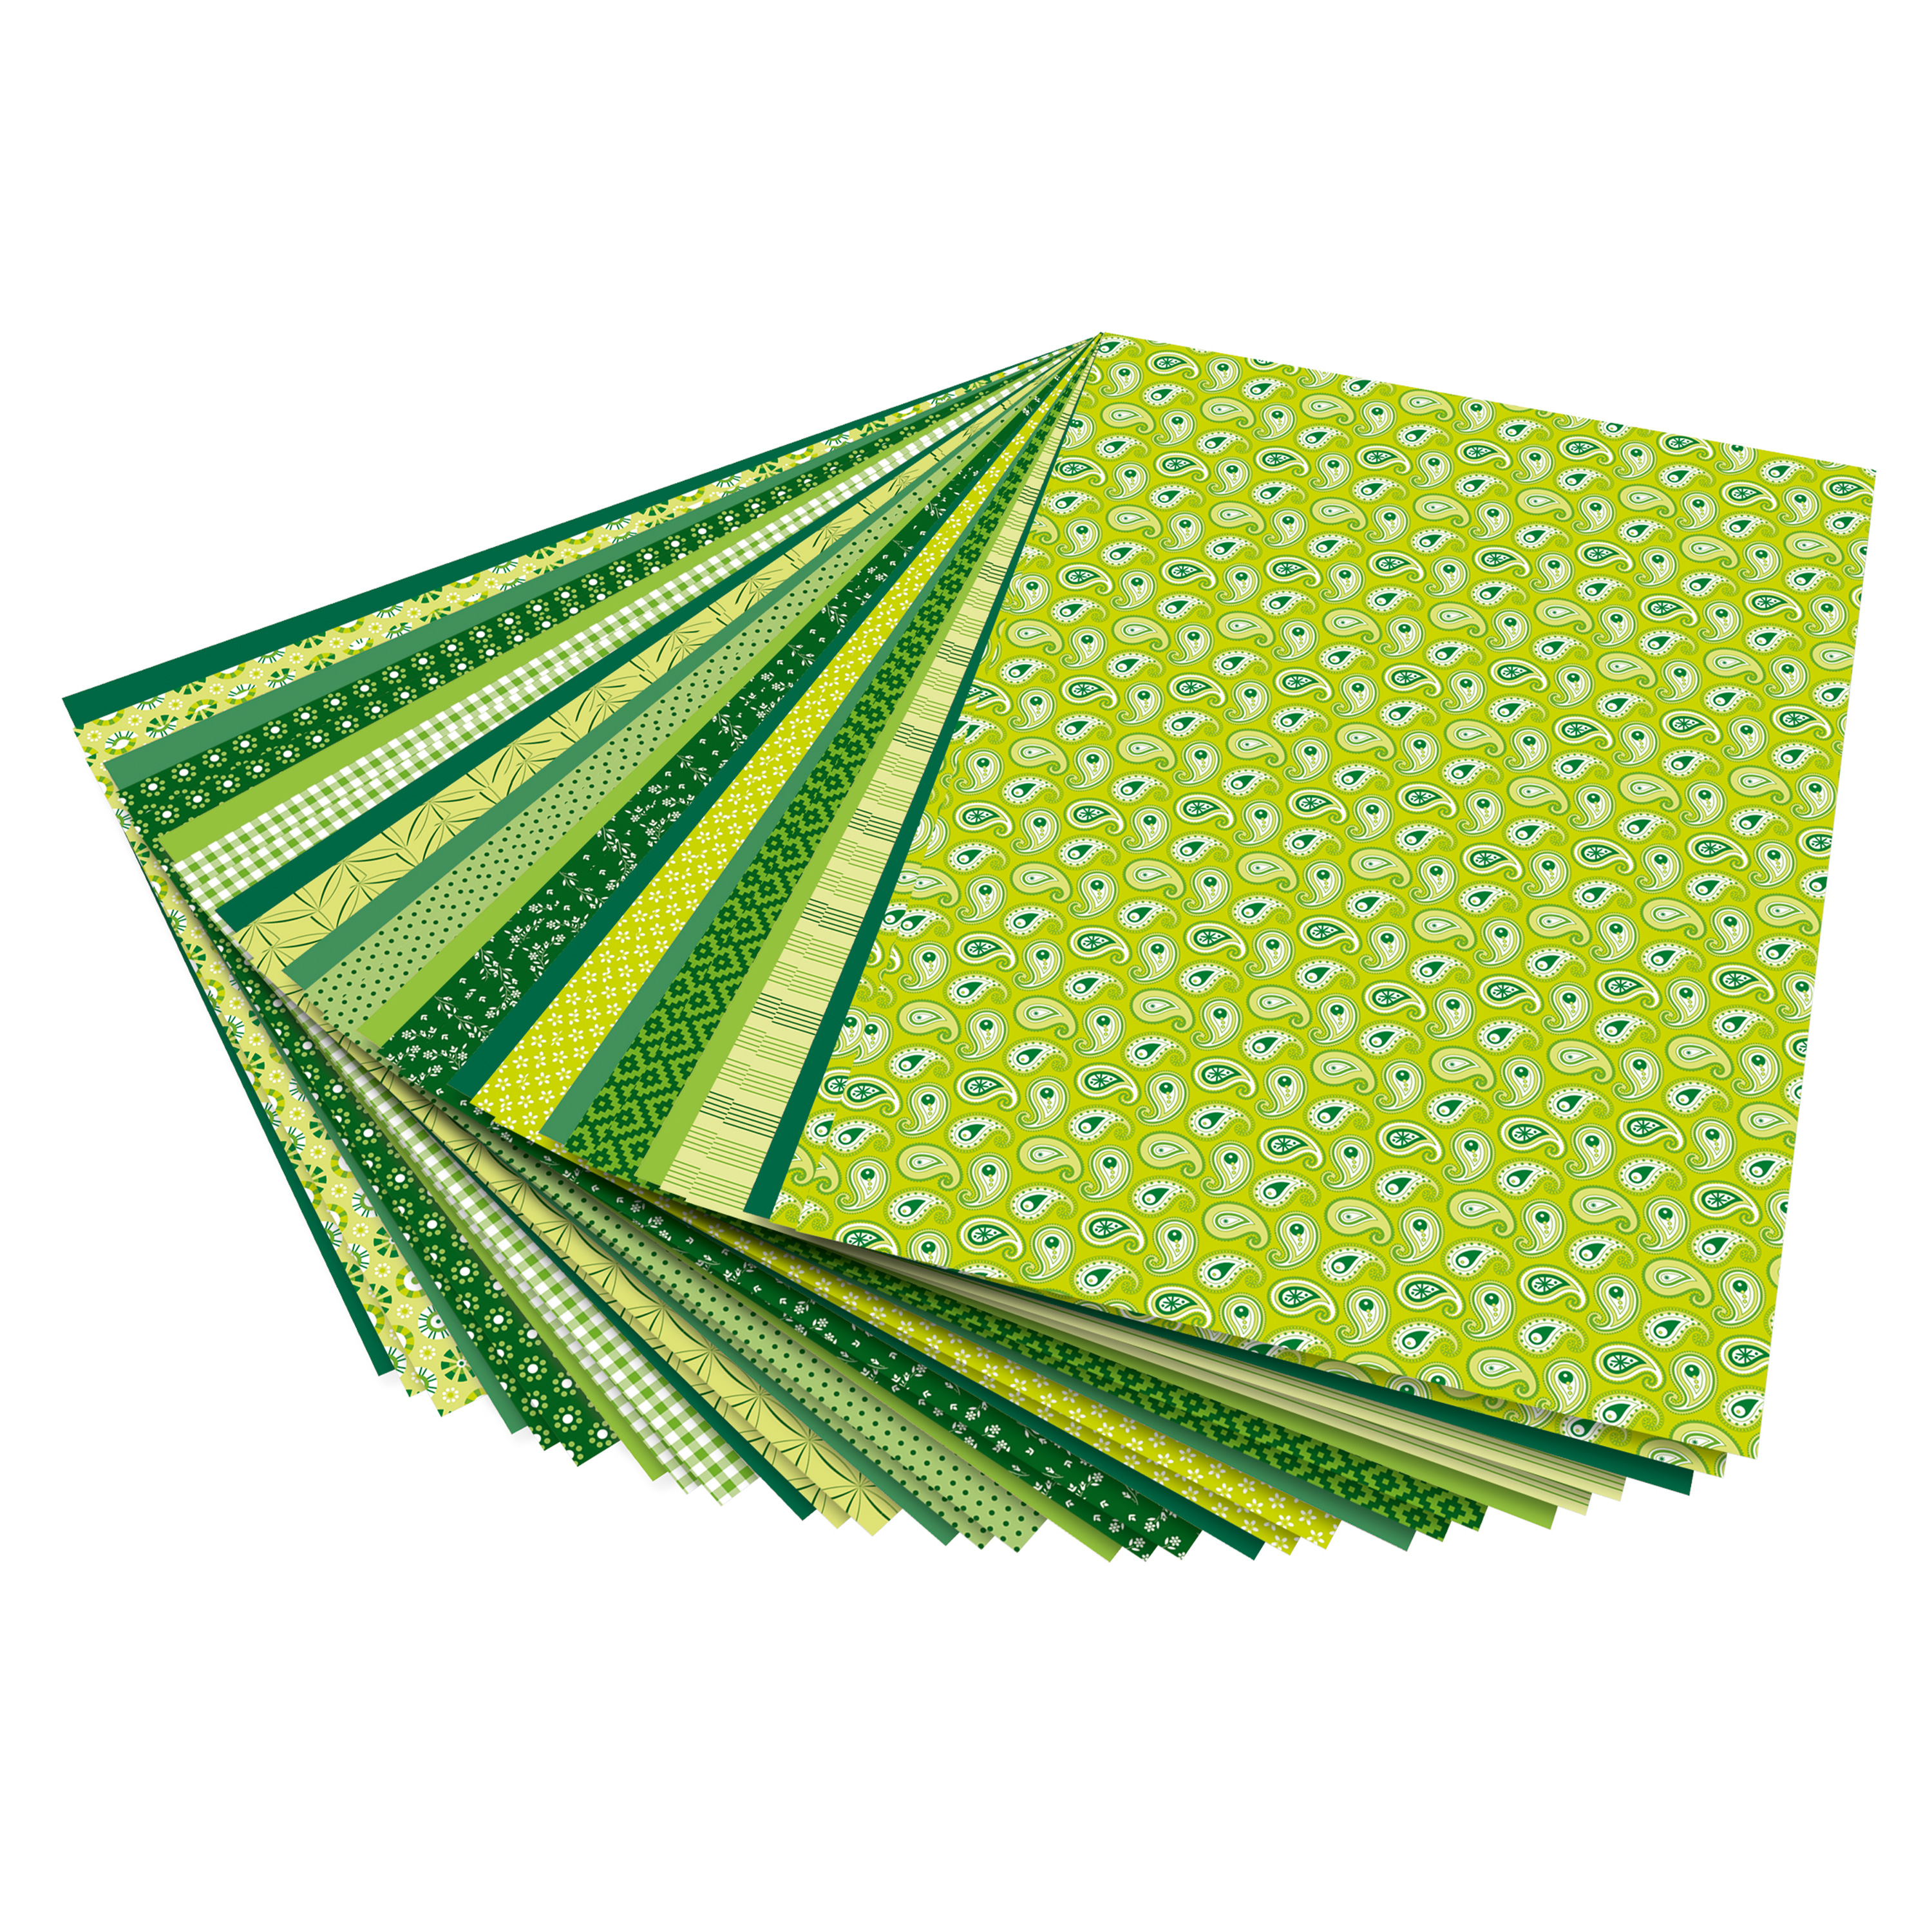 Motivpapier-Block 'Basics', grün, 24 x 34 cm